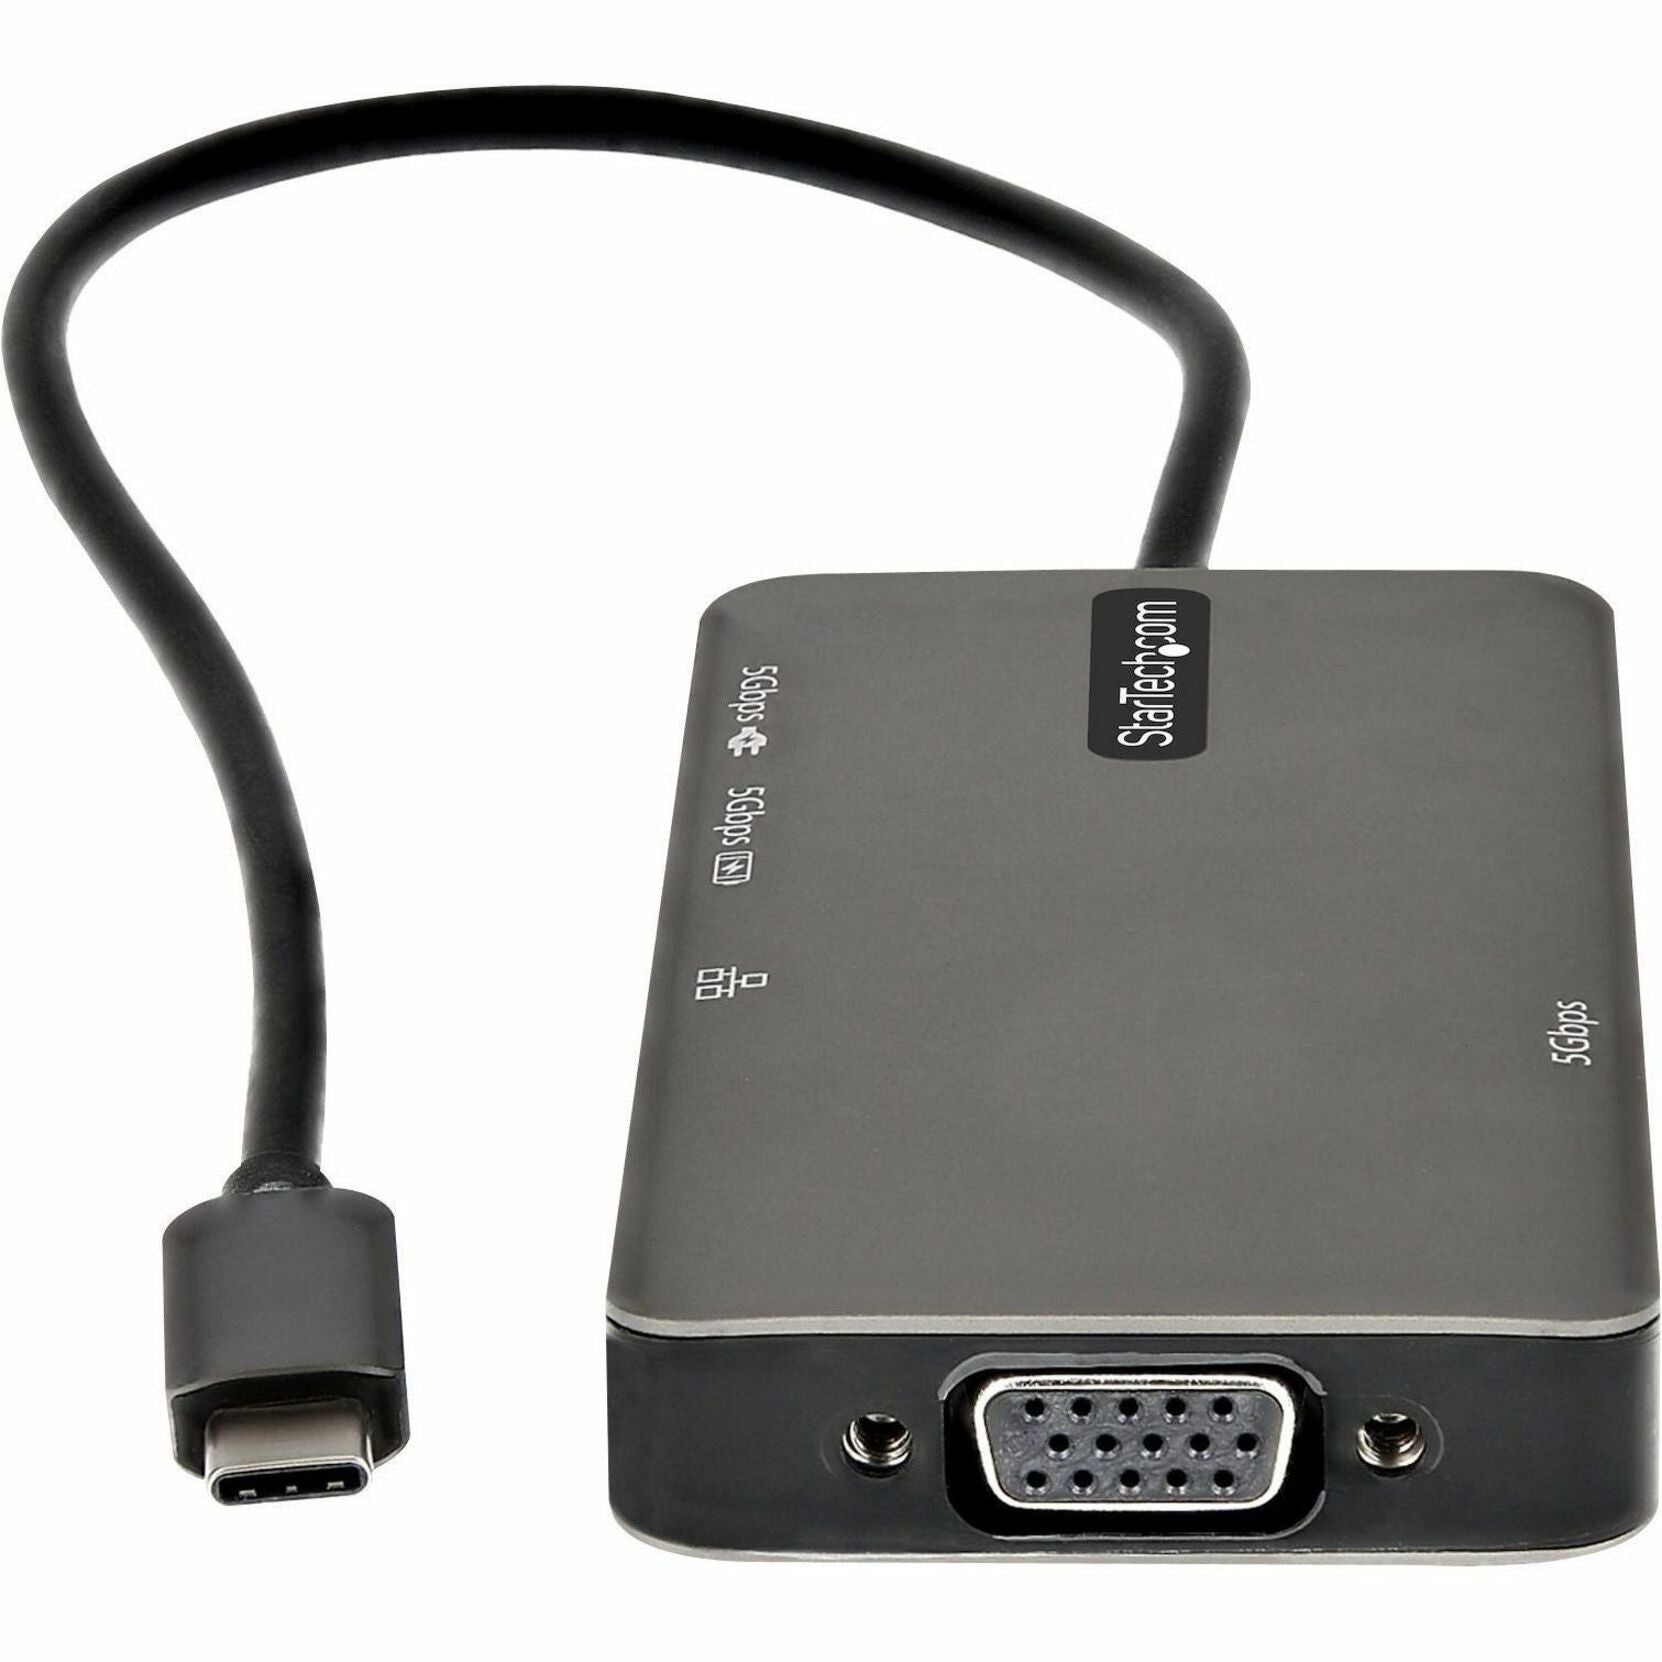 StarTech.com DKT30CHVPD2 USB-C Multiport Adapter, USB C to 4K HDMI or VGA, USB Type-C Mini Dock, 100W PD Passthrough, 3x USB 3.0, GbE